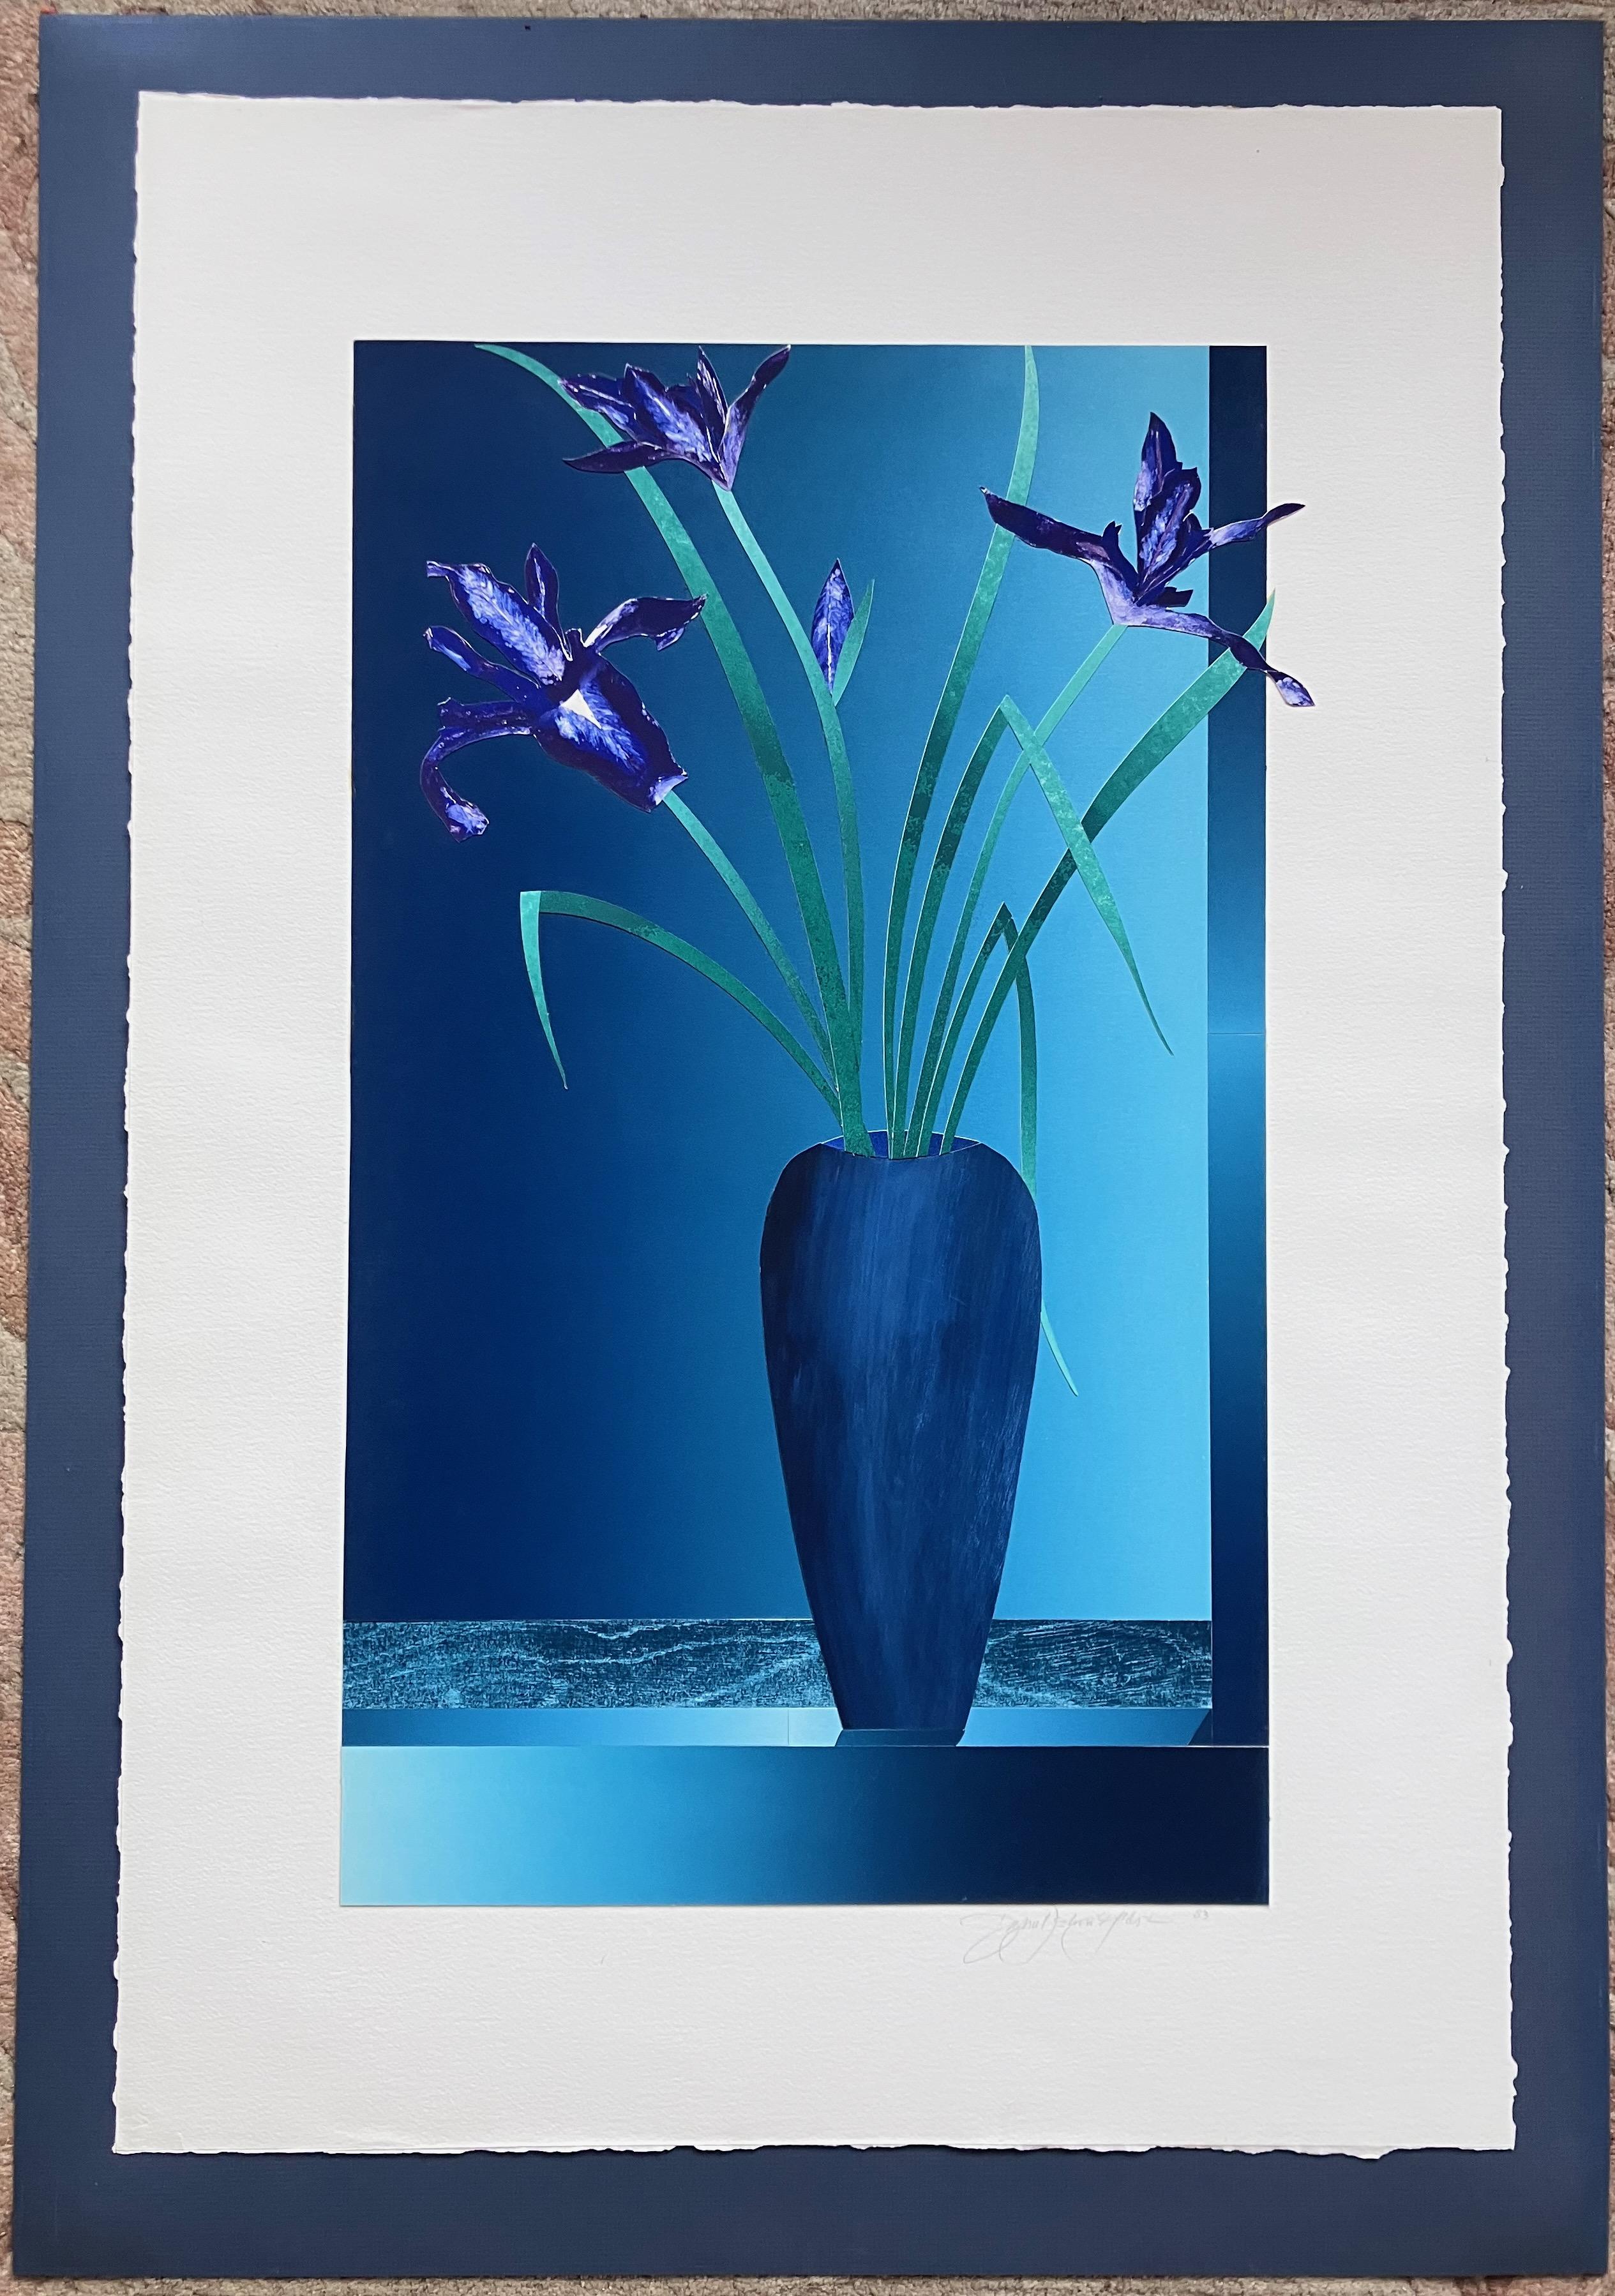 Artist: Daniel Joshua Goldstein – American (1950 -)
Title: Still Life - Irises in Vase 
Year: Circa 1983
Medium: Mixed media with collage
Image Size: 27.75 x 17.25 inches
Sheet Size: 36.25 x 24.5 inches
Framed Size: 40.25 x 28.25 inches
Signature: